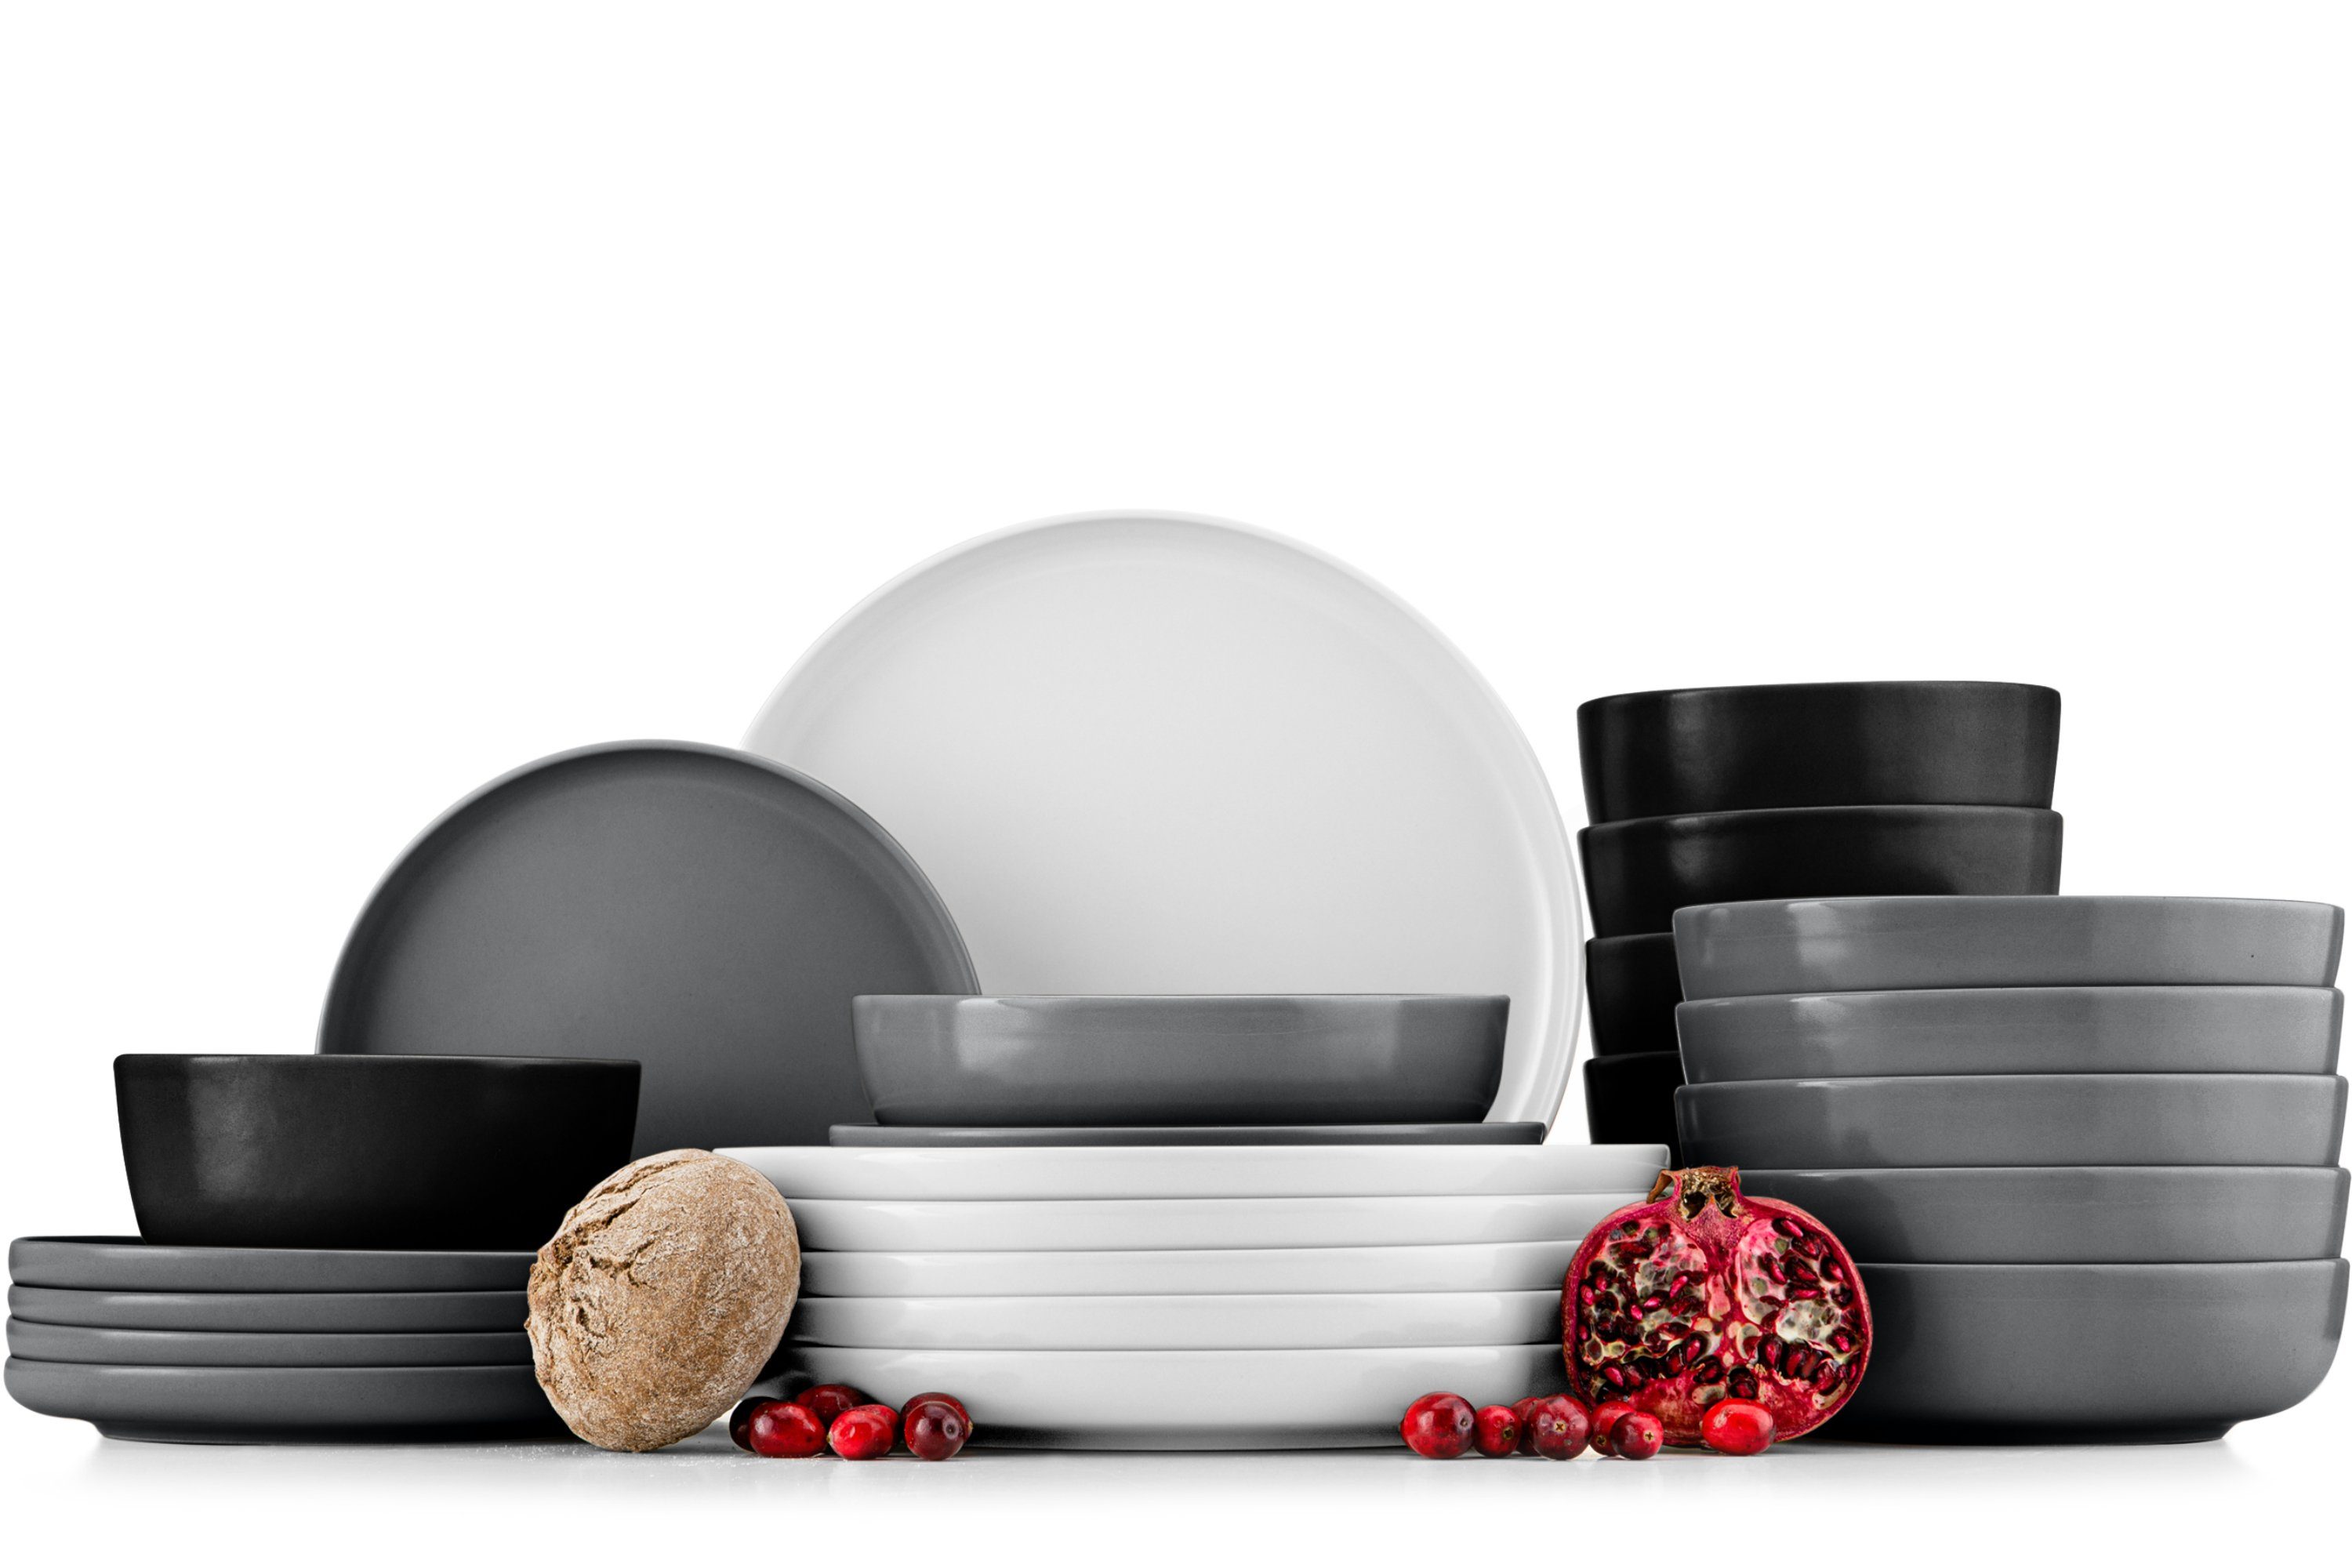 Konsimo Kombiservice VICTO Geschirrset hergestellt in der EU (24-tlg), 6 Personen, Steingut, spülmaschinengeeignet, mikrowellengeeignet, mehrfarbig, matt matt weiß/grau/schwarz/grau